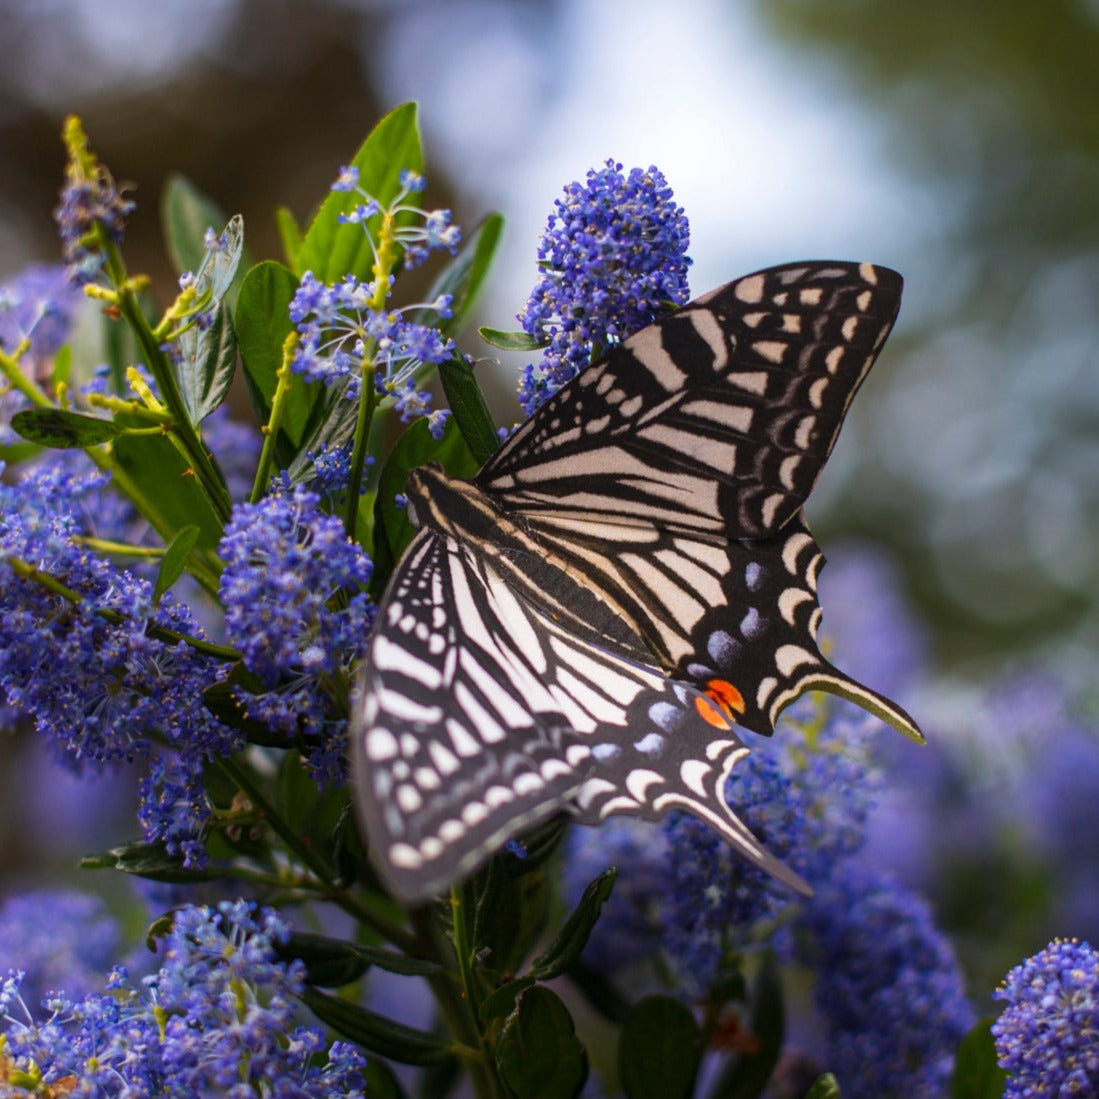 'Asian swallowtail' Butterfly